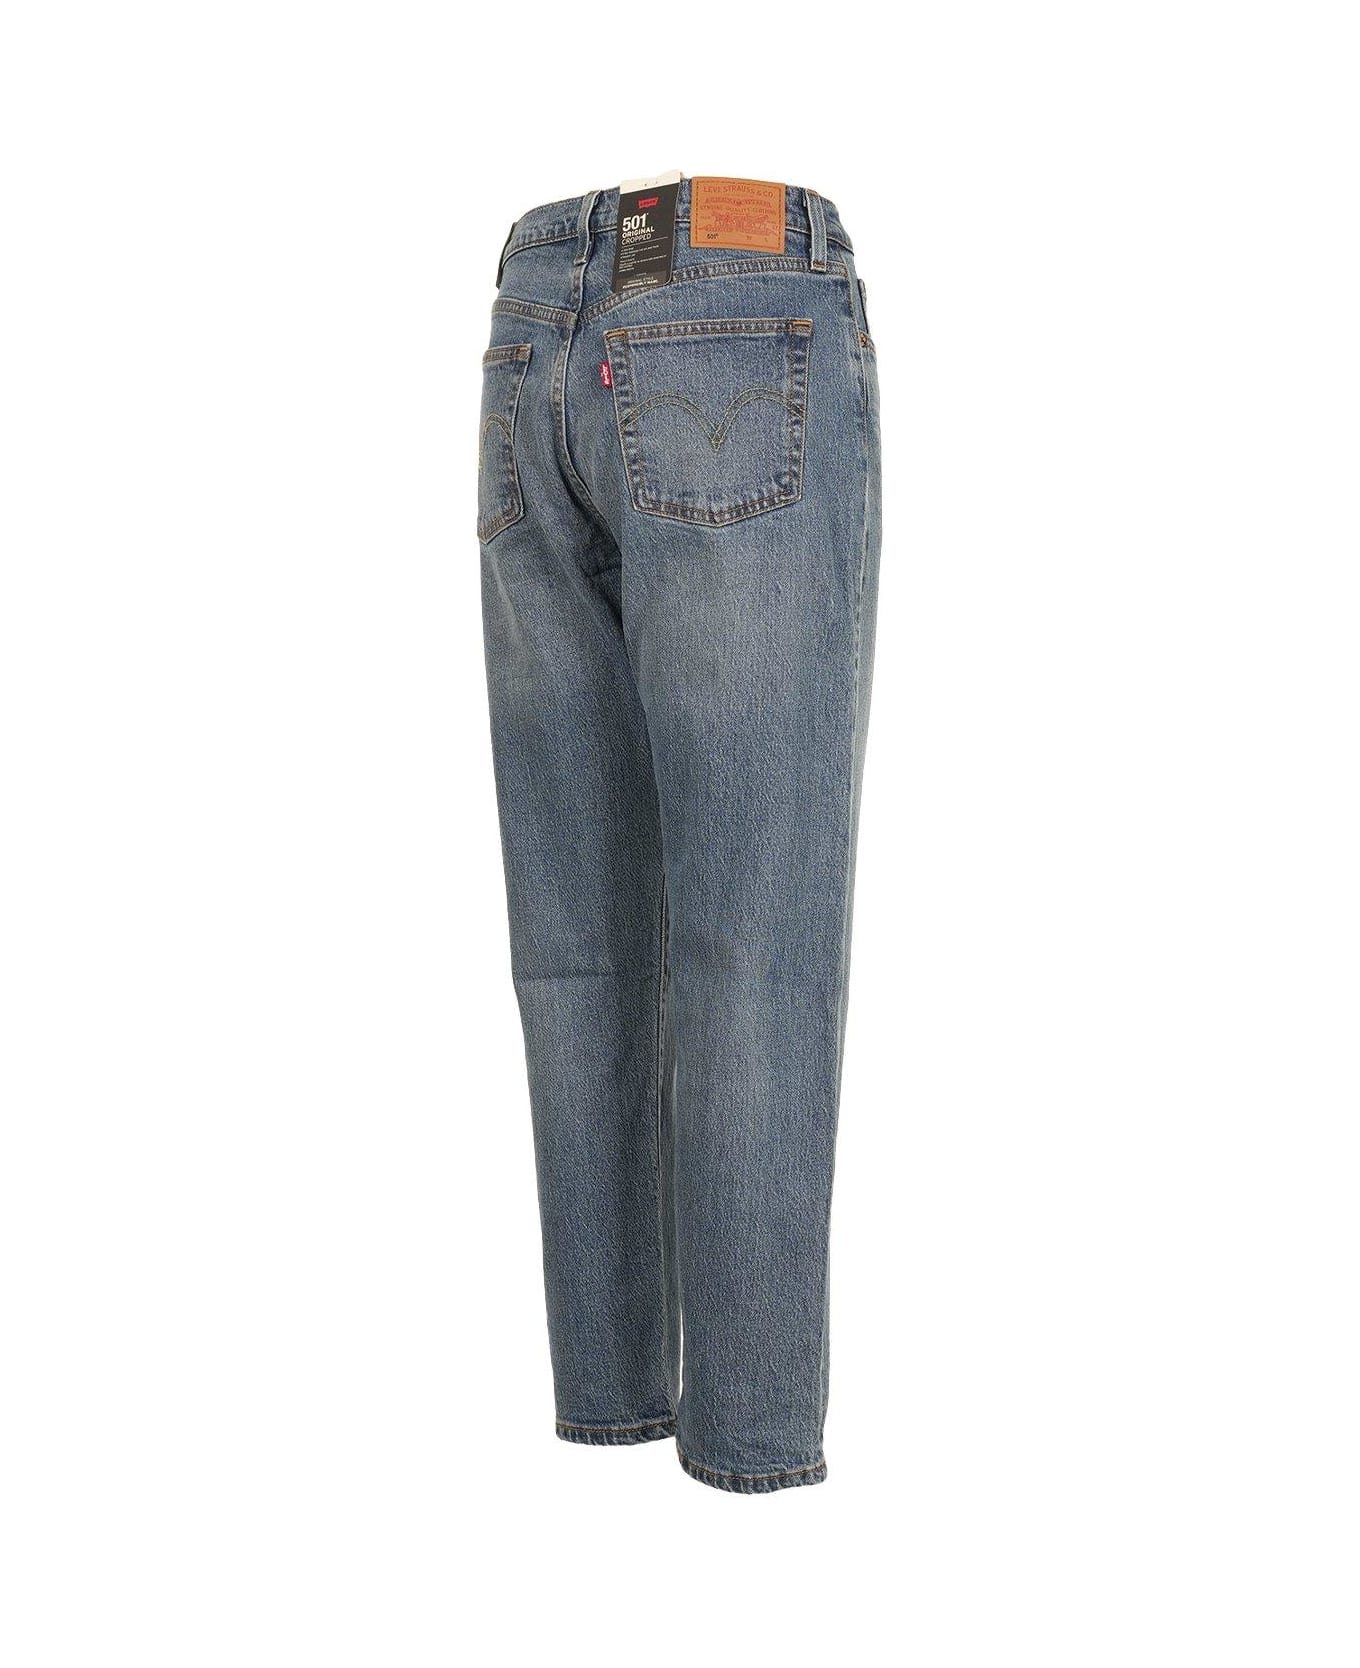 Levi's 501 Crop Jeans デニム